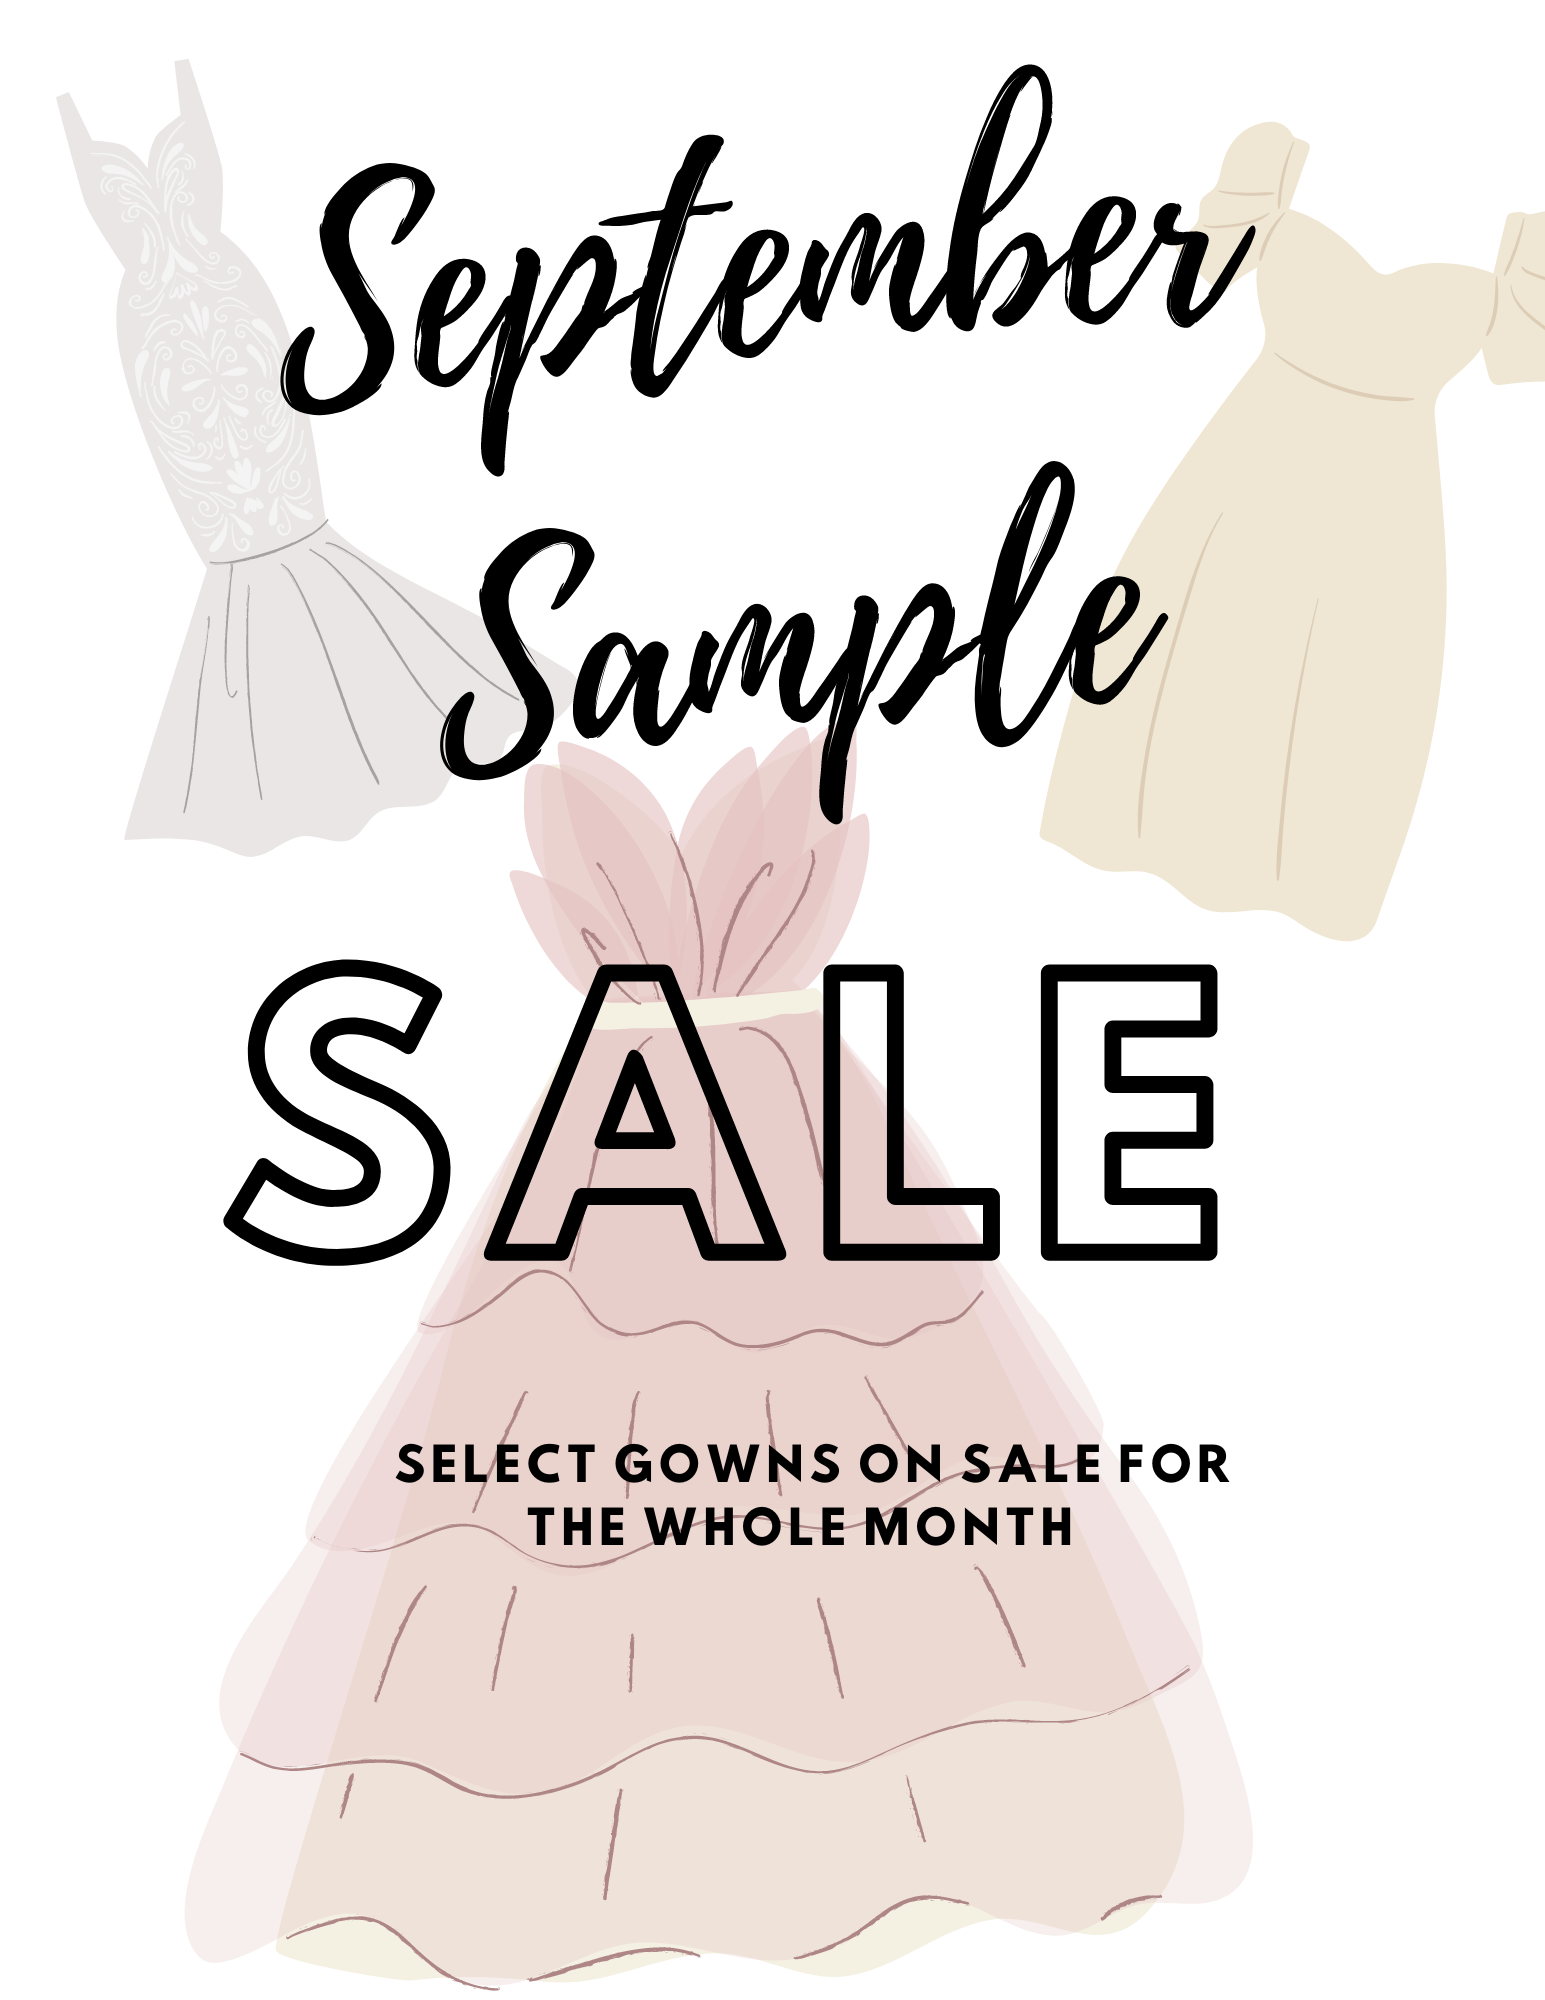 September Sample Sale